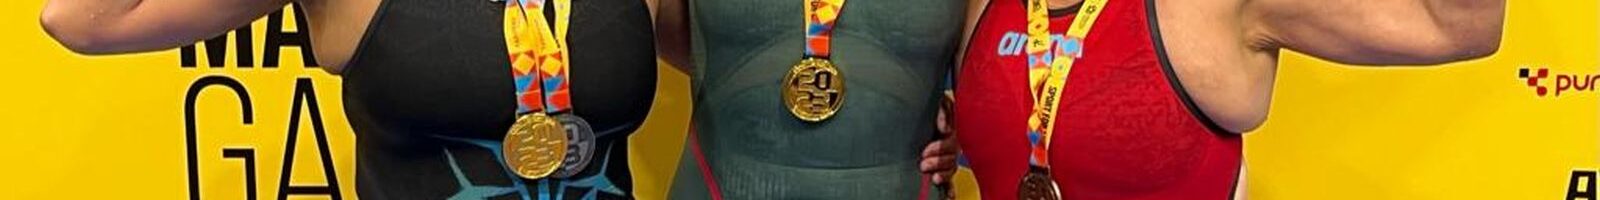 Eerste EMG2023-medaille is binnen